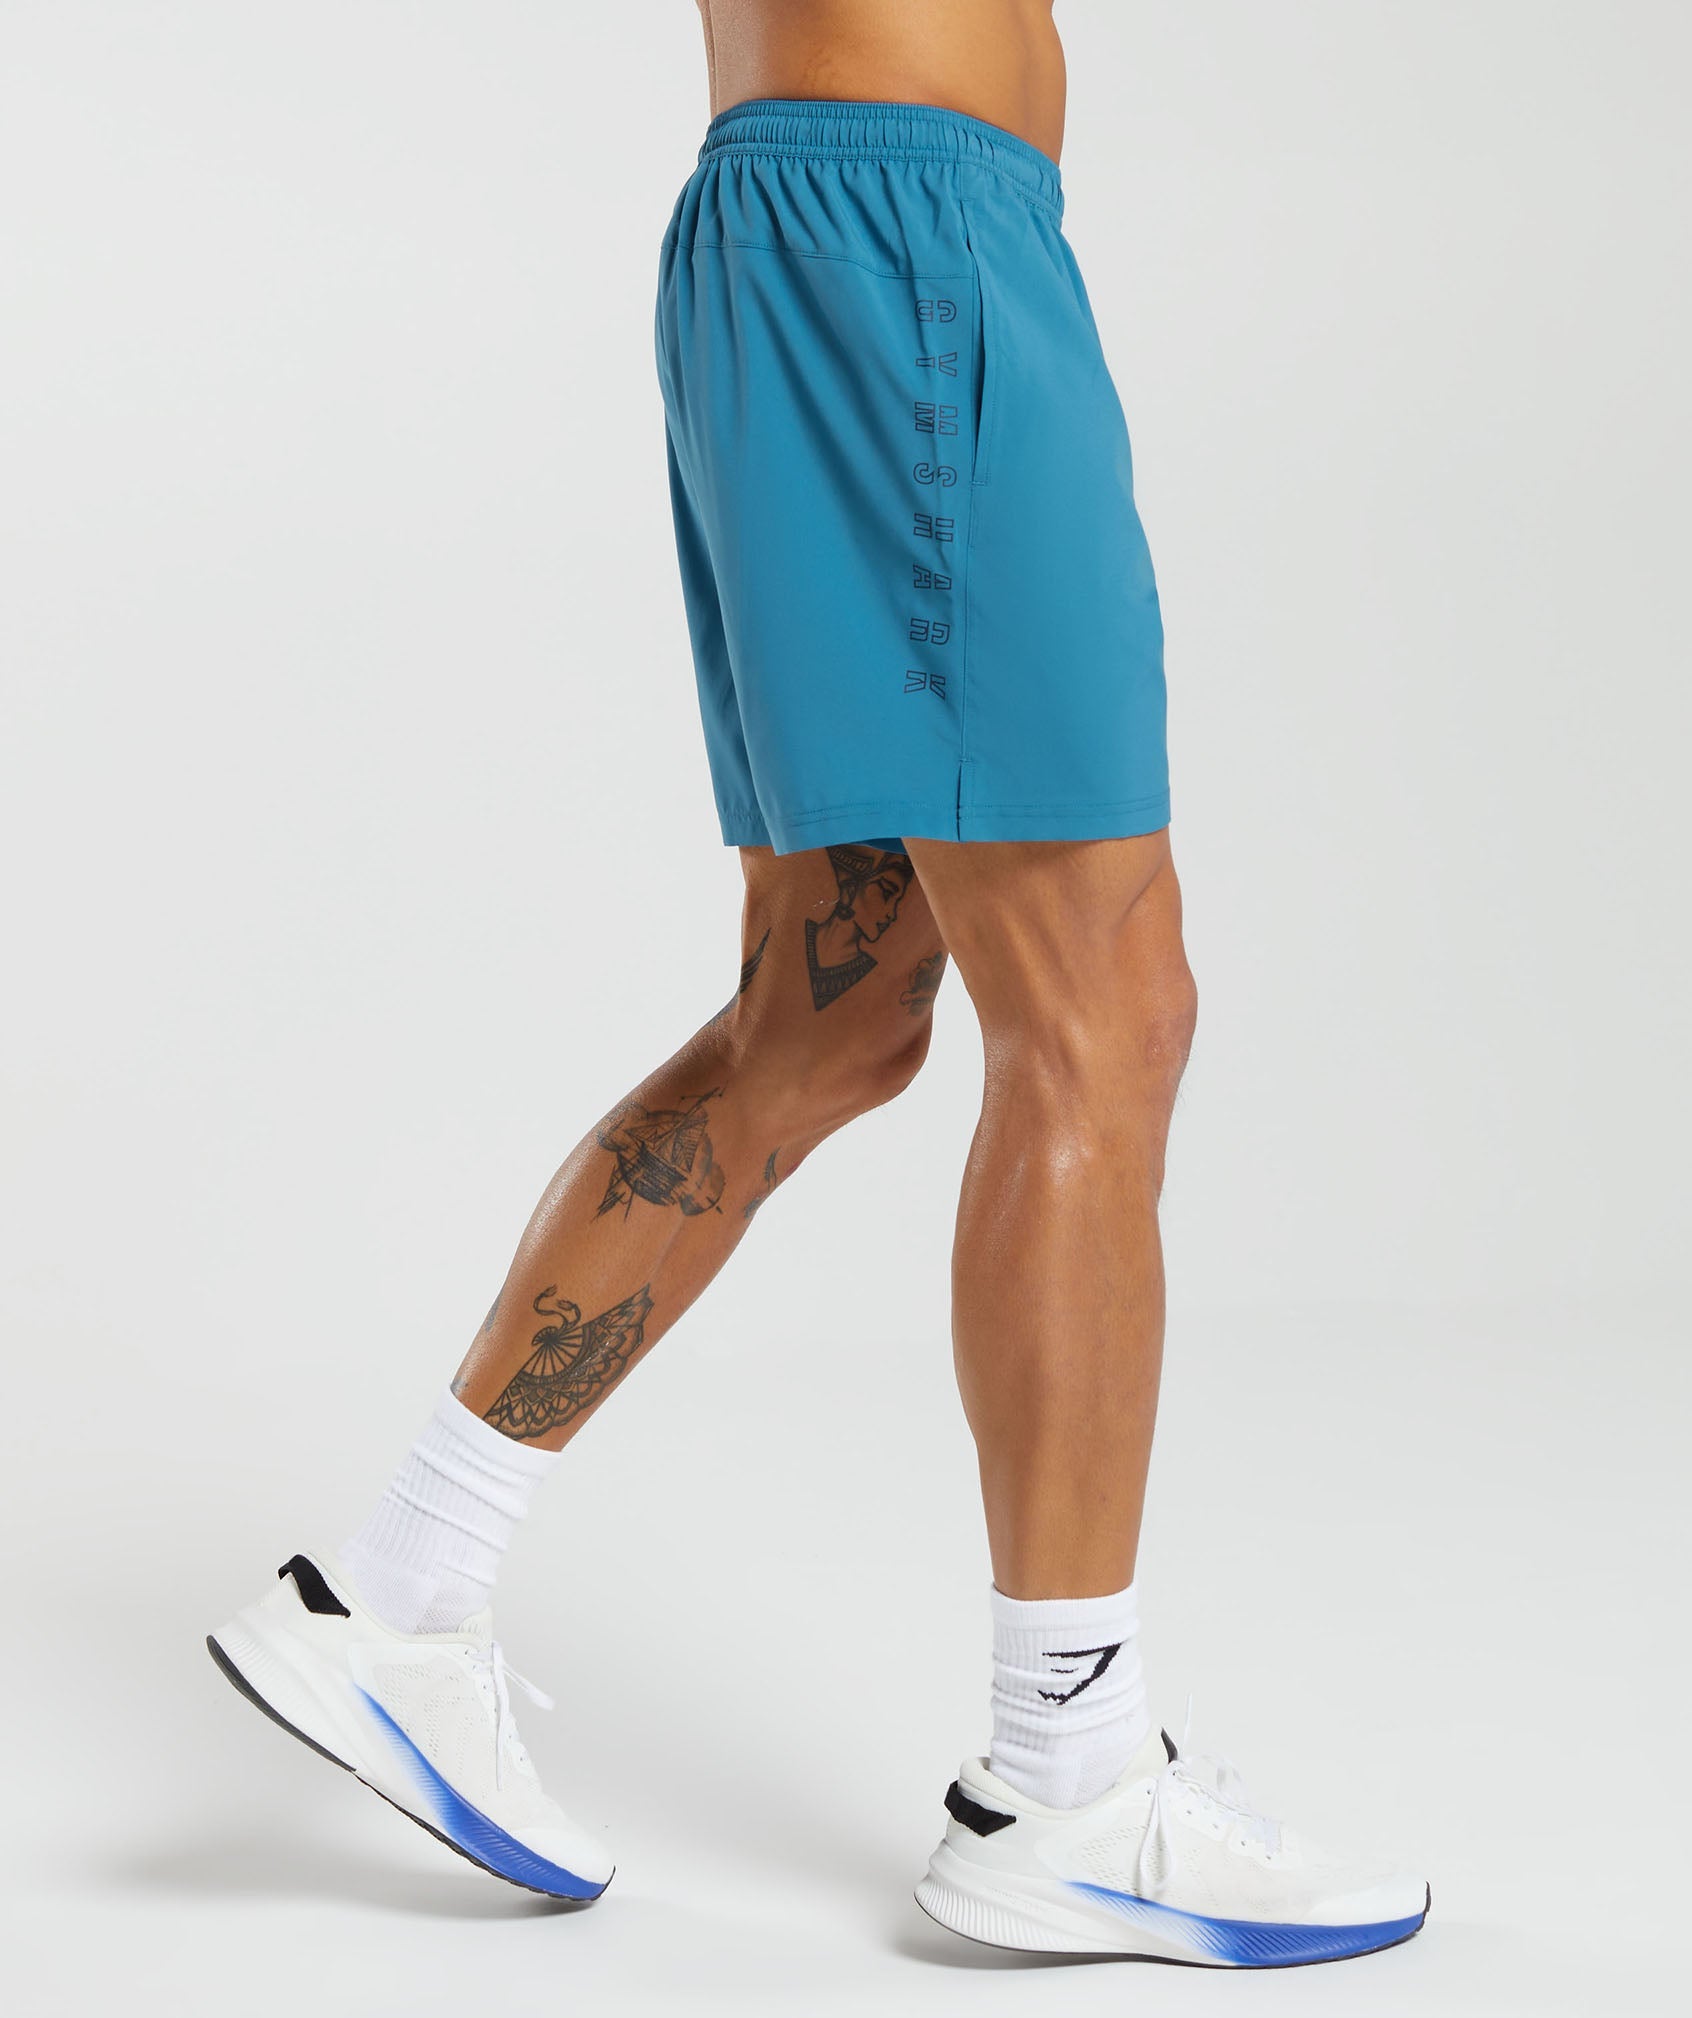 Short de sport flex noir homme - Nike